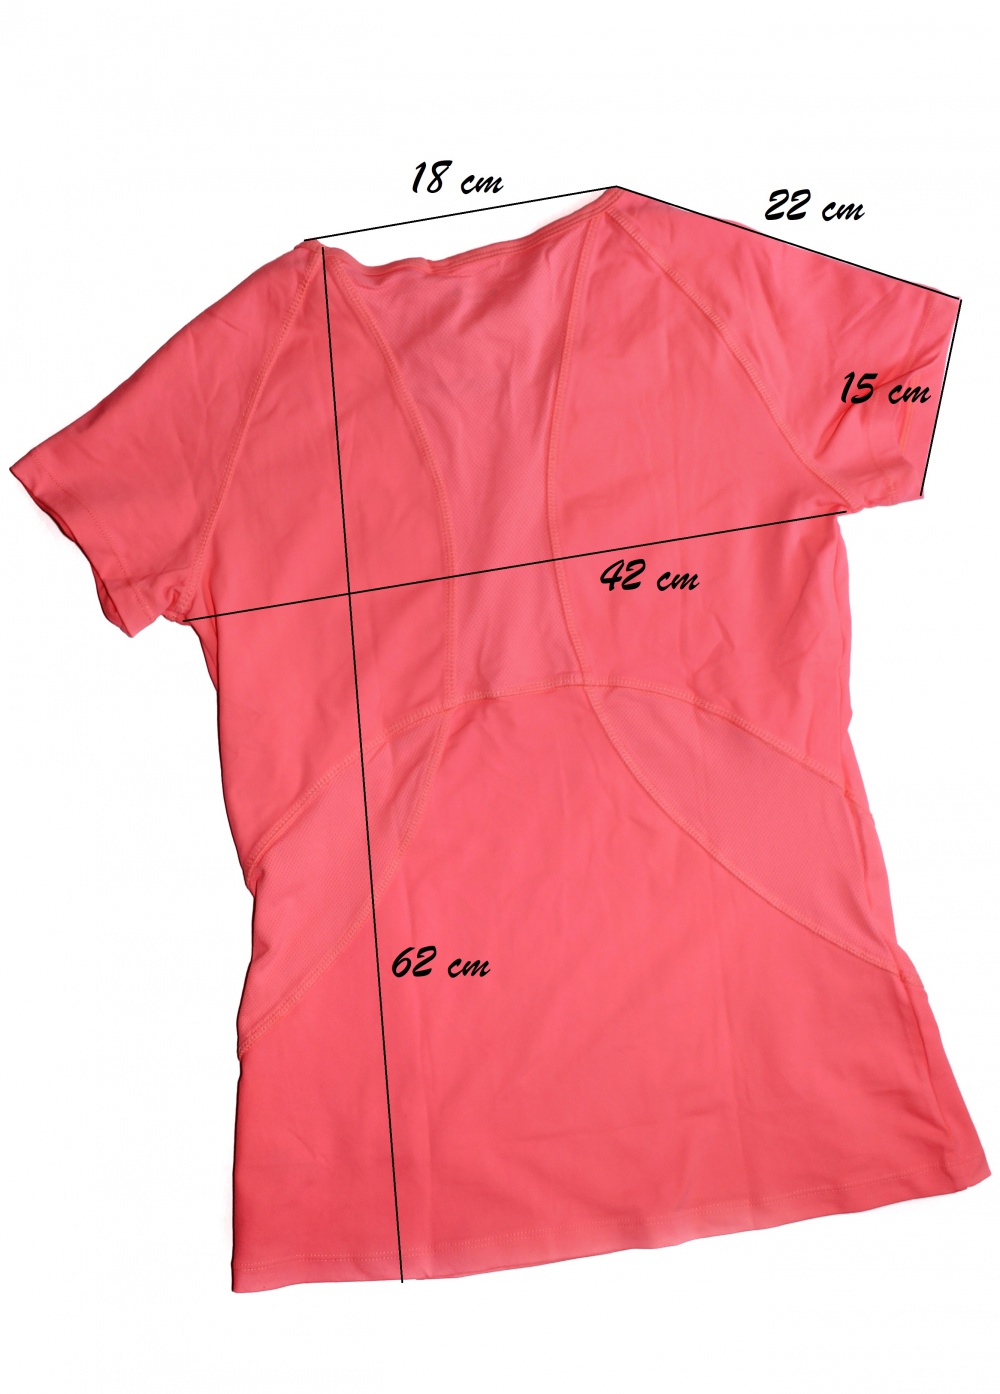 Спортивная футболка Target, размер 10 (46)